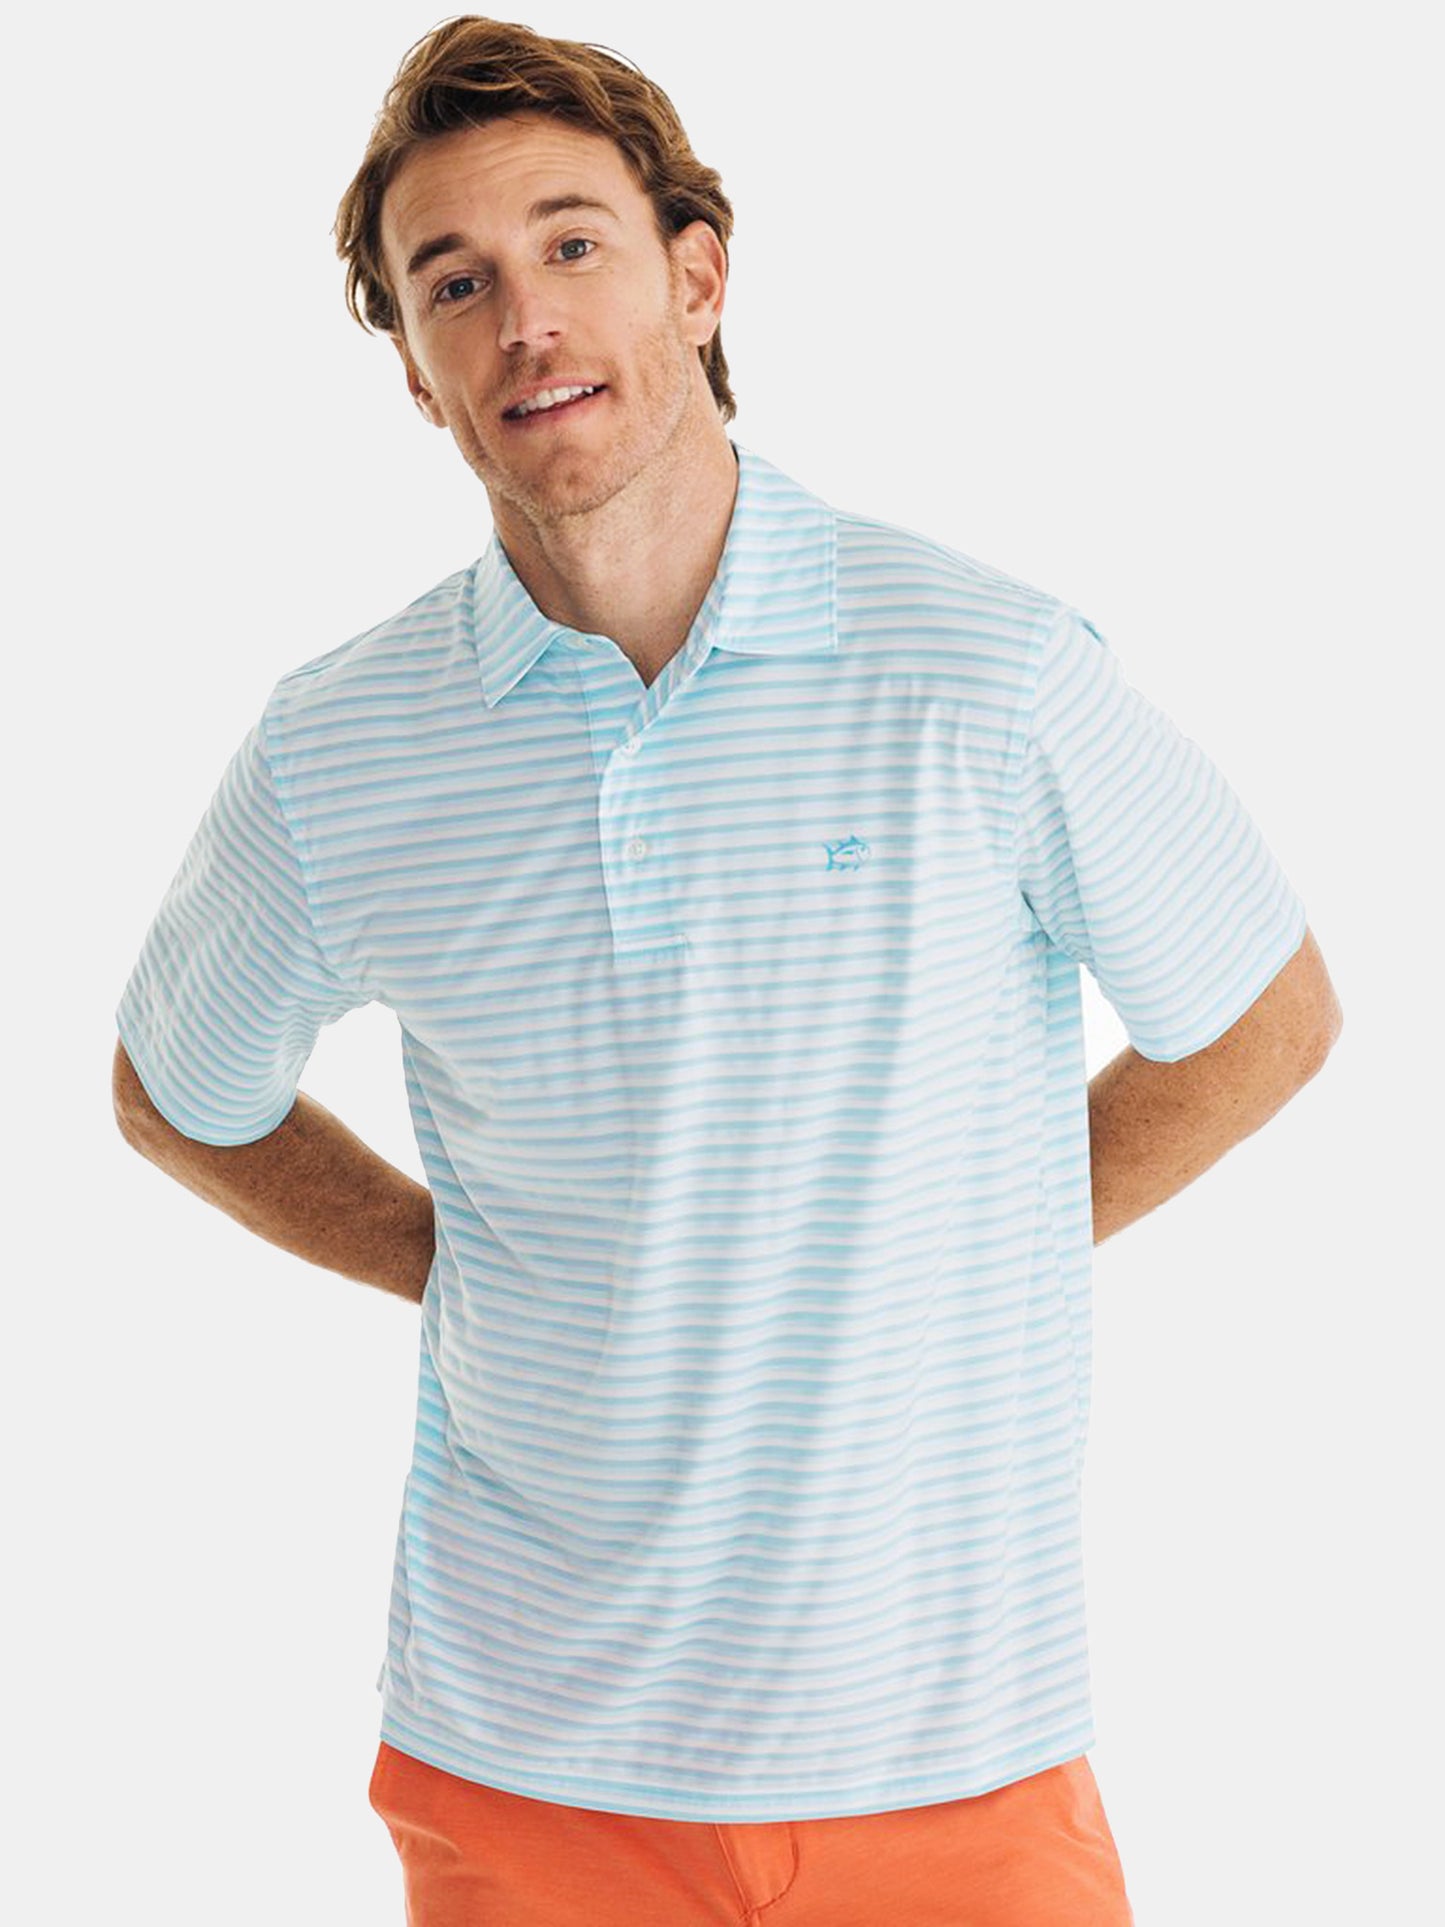 Southern Tide Men's Heathered Stripe Driver Performance Polo Shirt